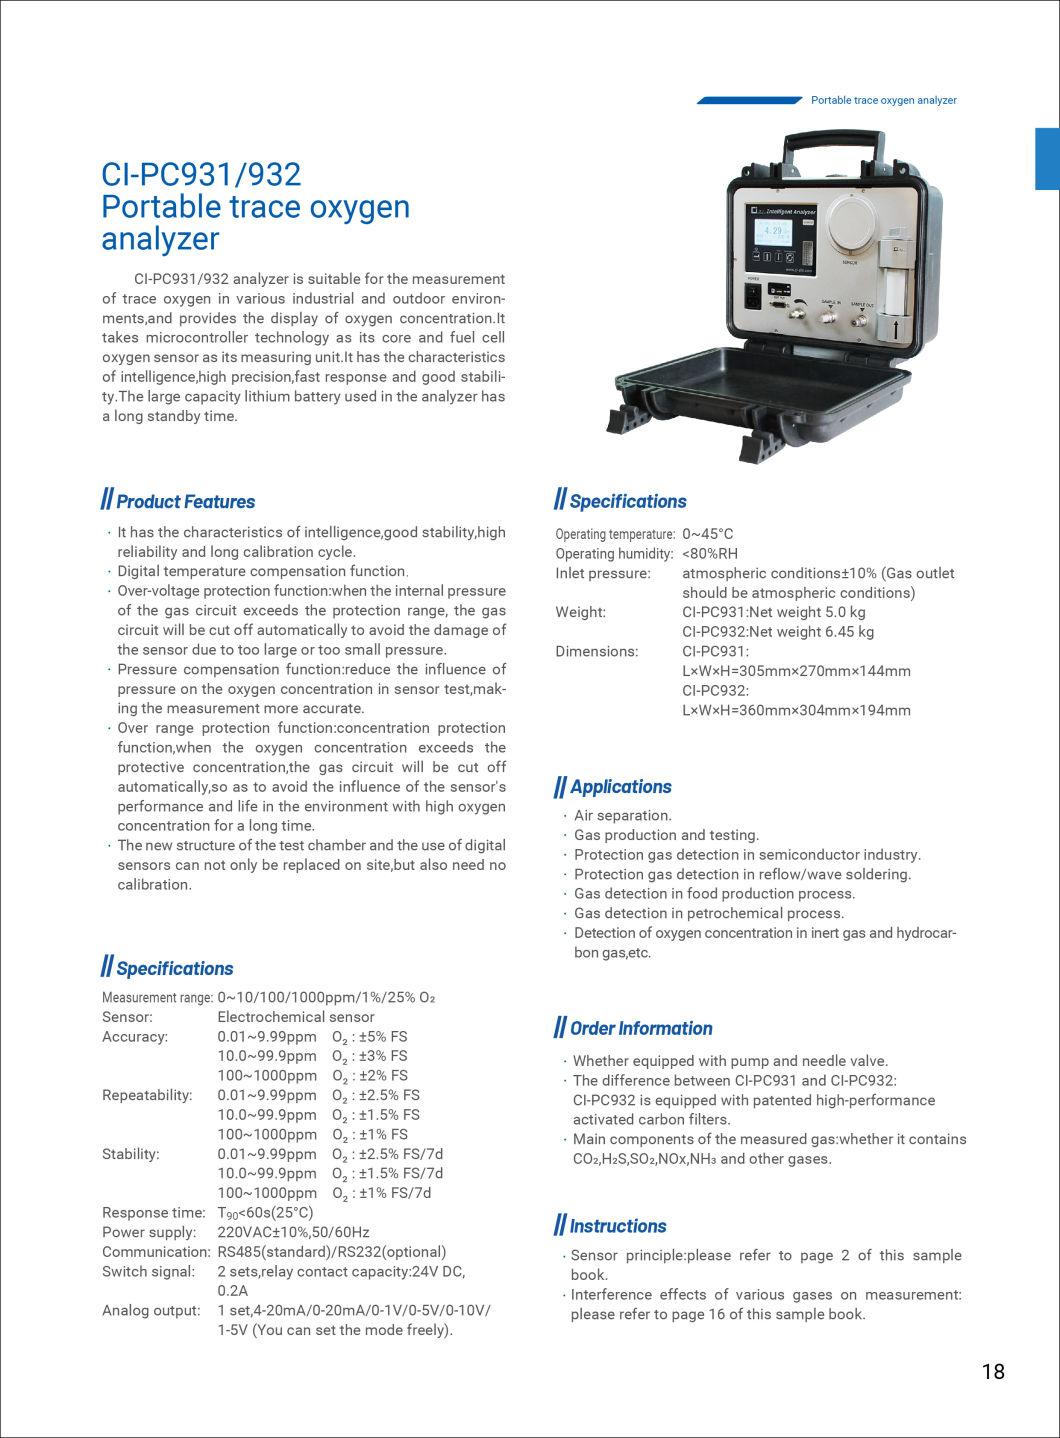 Ci-PC931/932 Portable Trace Oxygen Analyzer